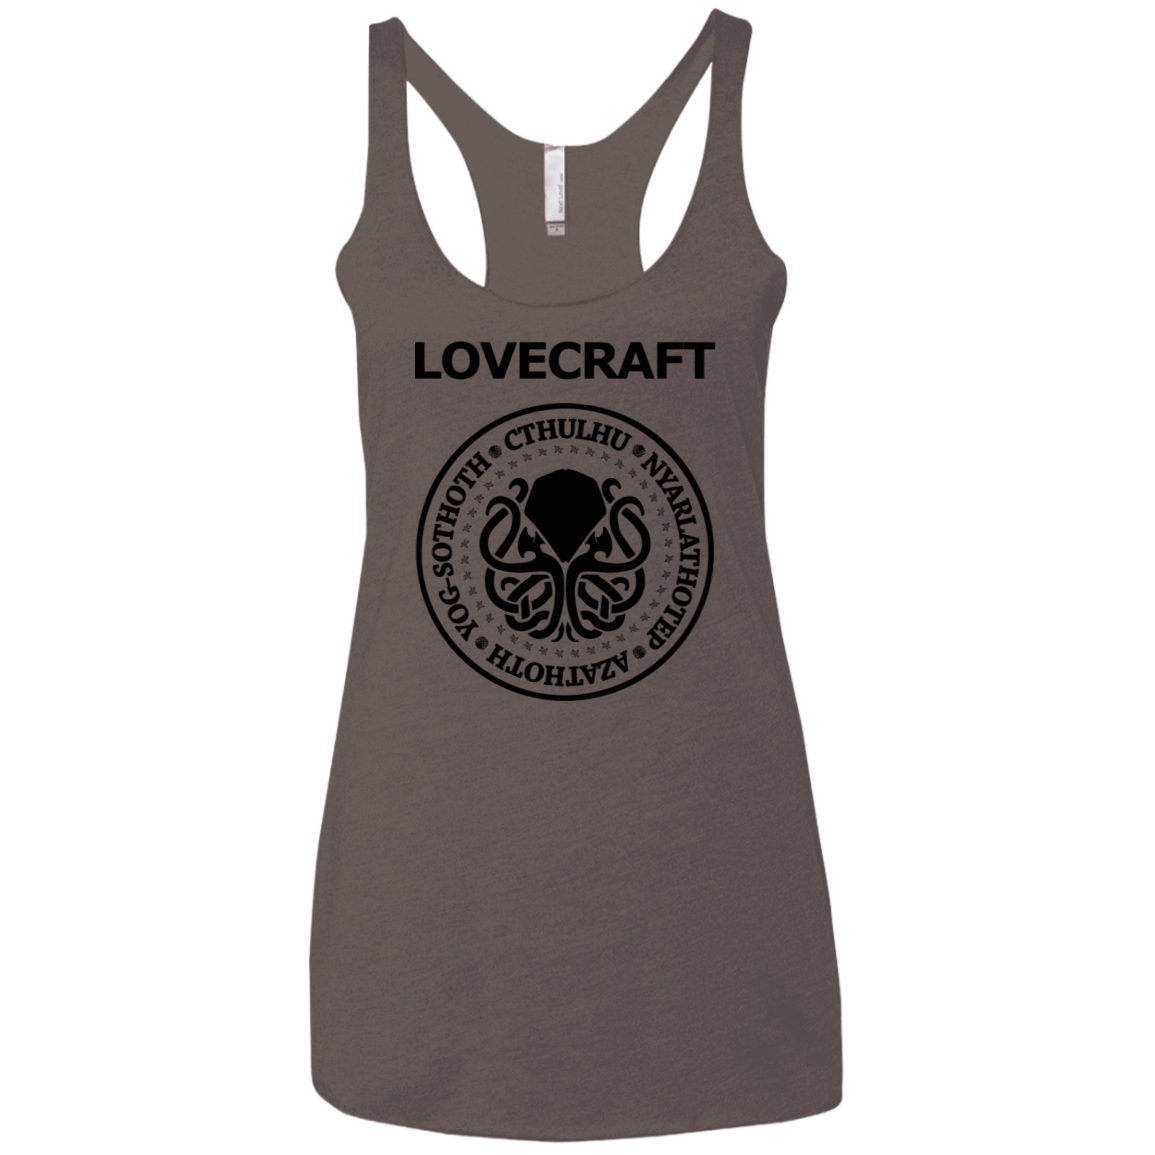 T-Shirts Macchiato / X-Small Lovecraft Women's Triblend Racerback Tank